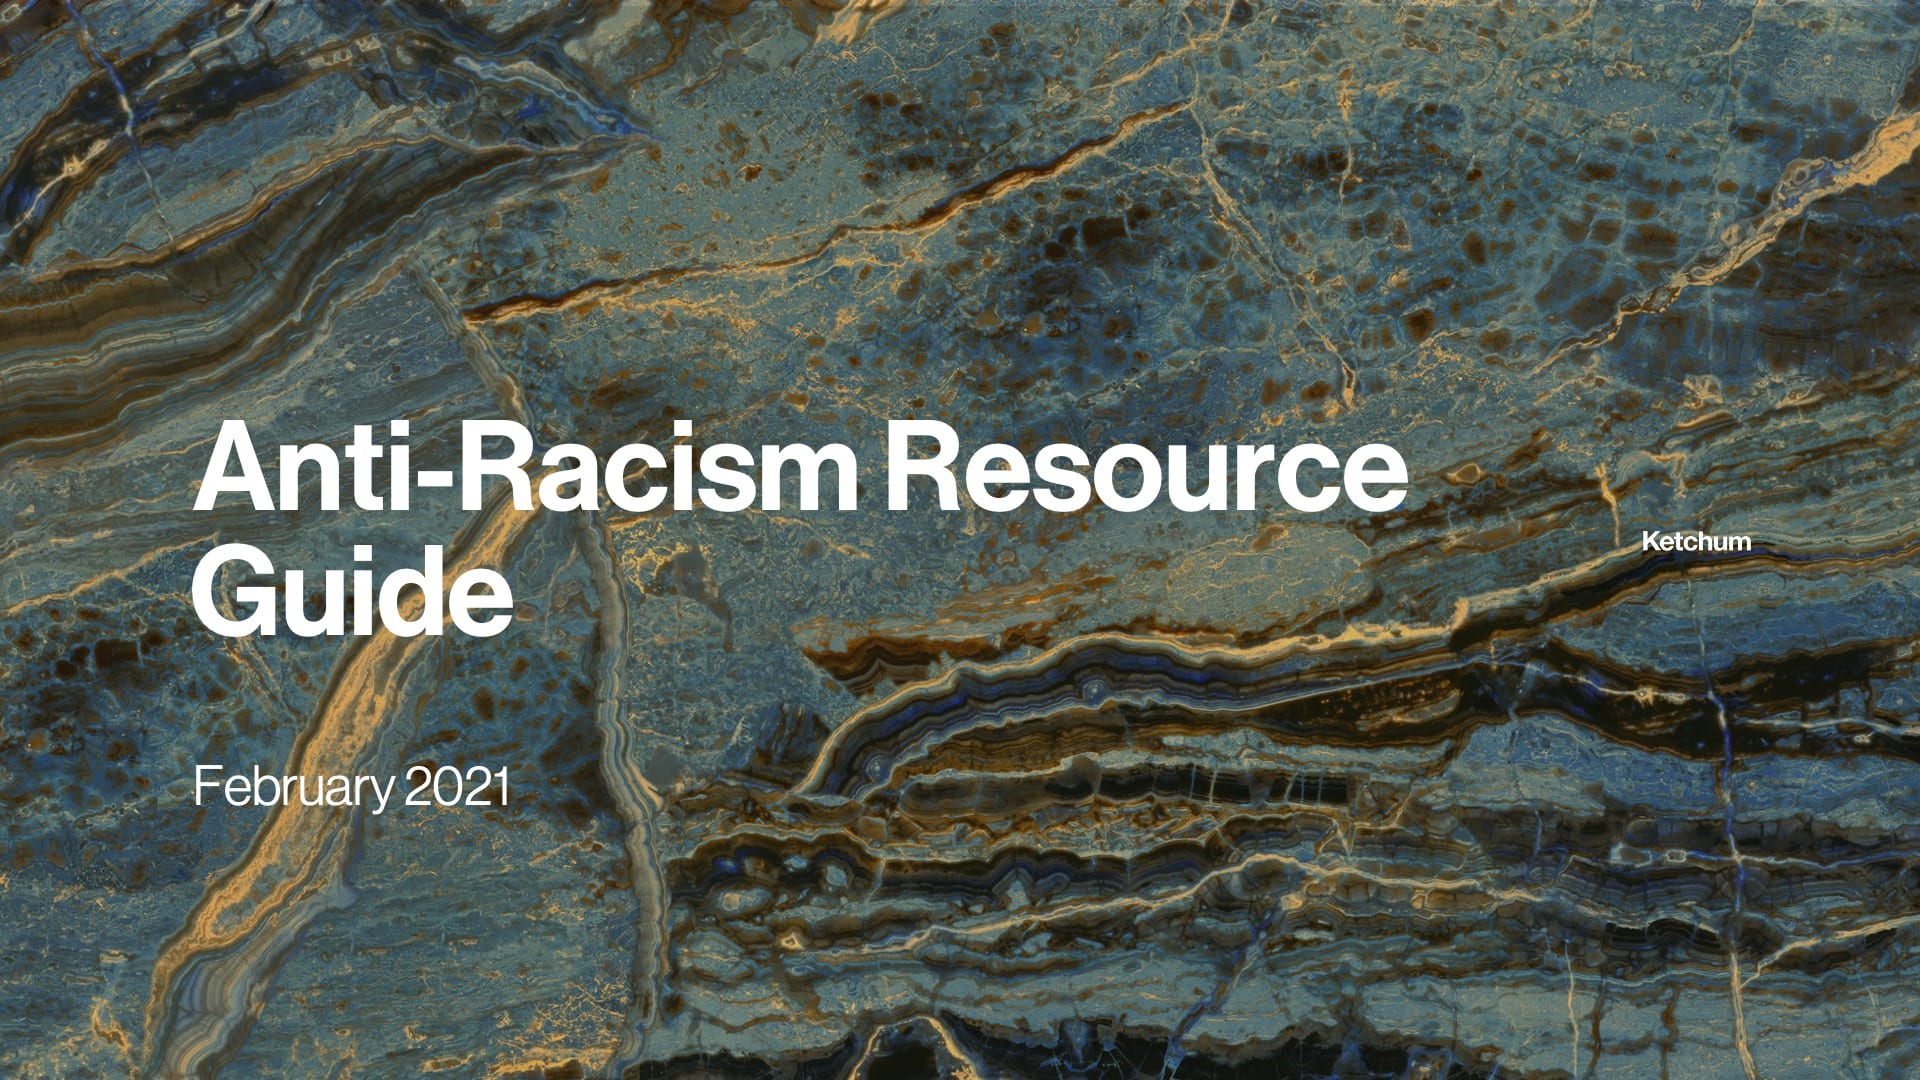 Ketchum Anti-Racism Resource Guide - February 2021